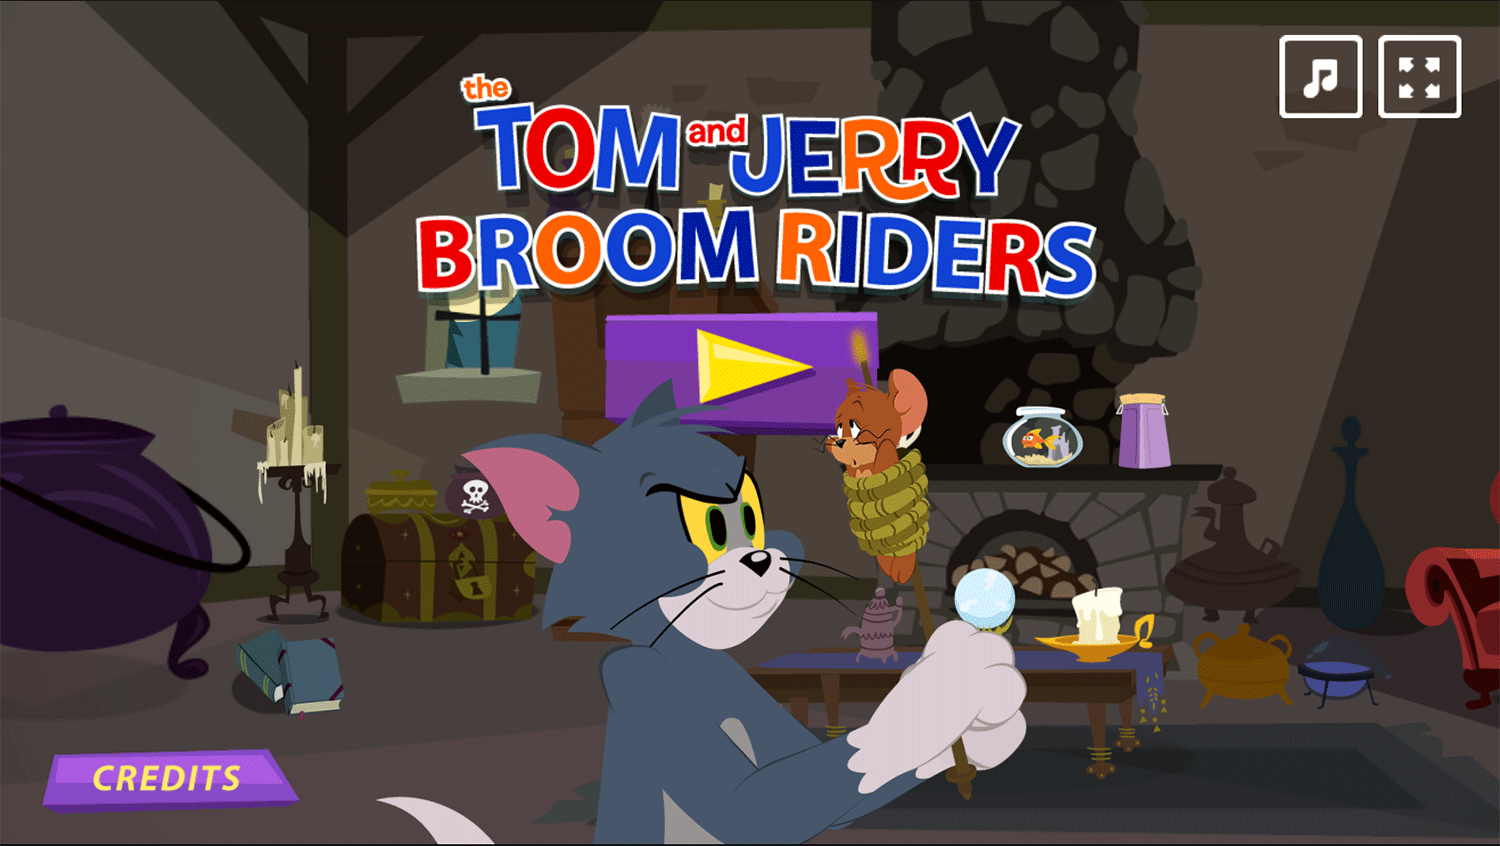 Tom and Jerry Broom Riders Welcome Screen Screenshots.